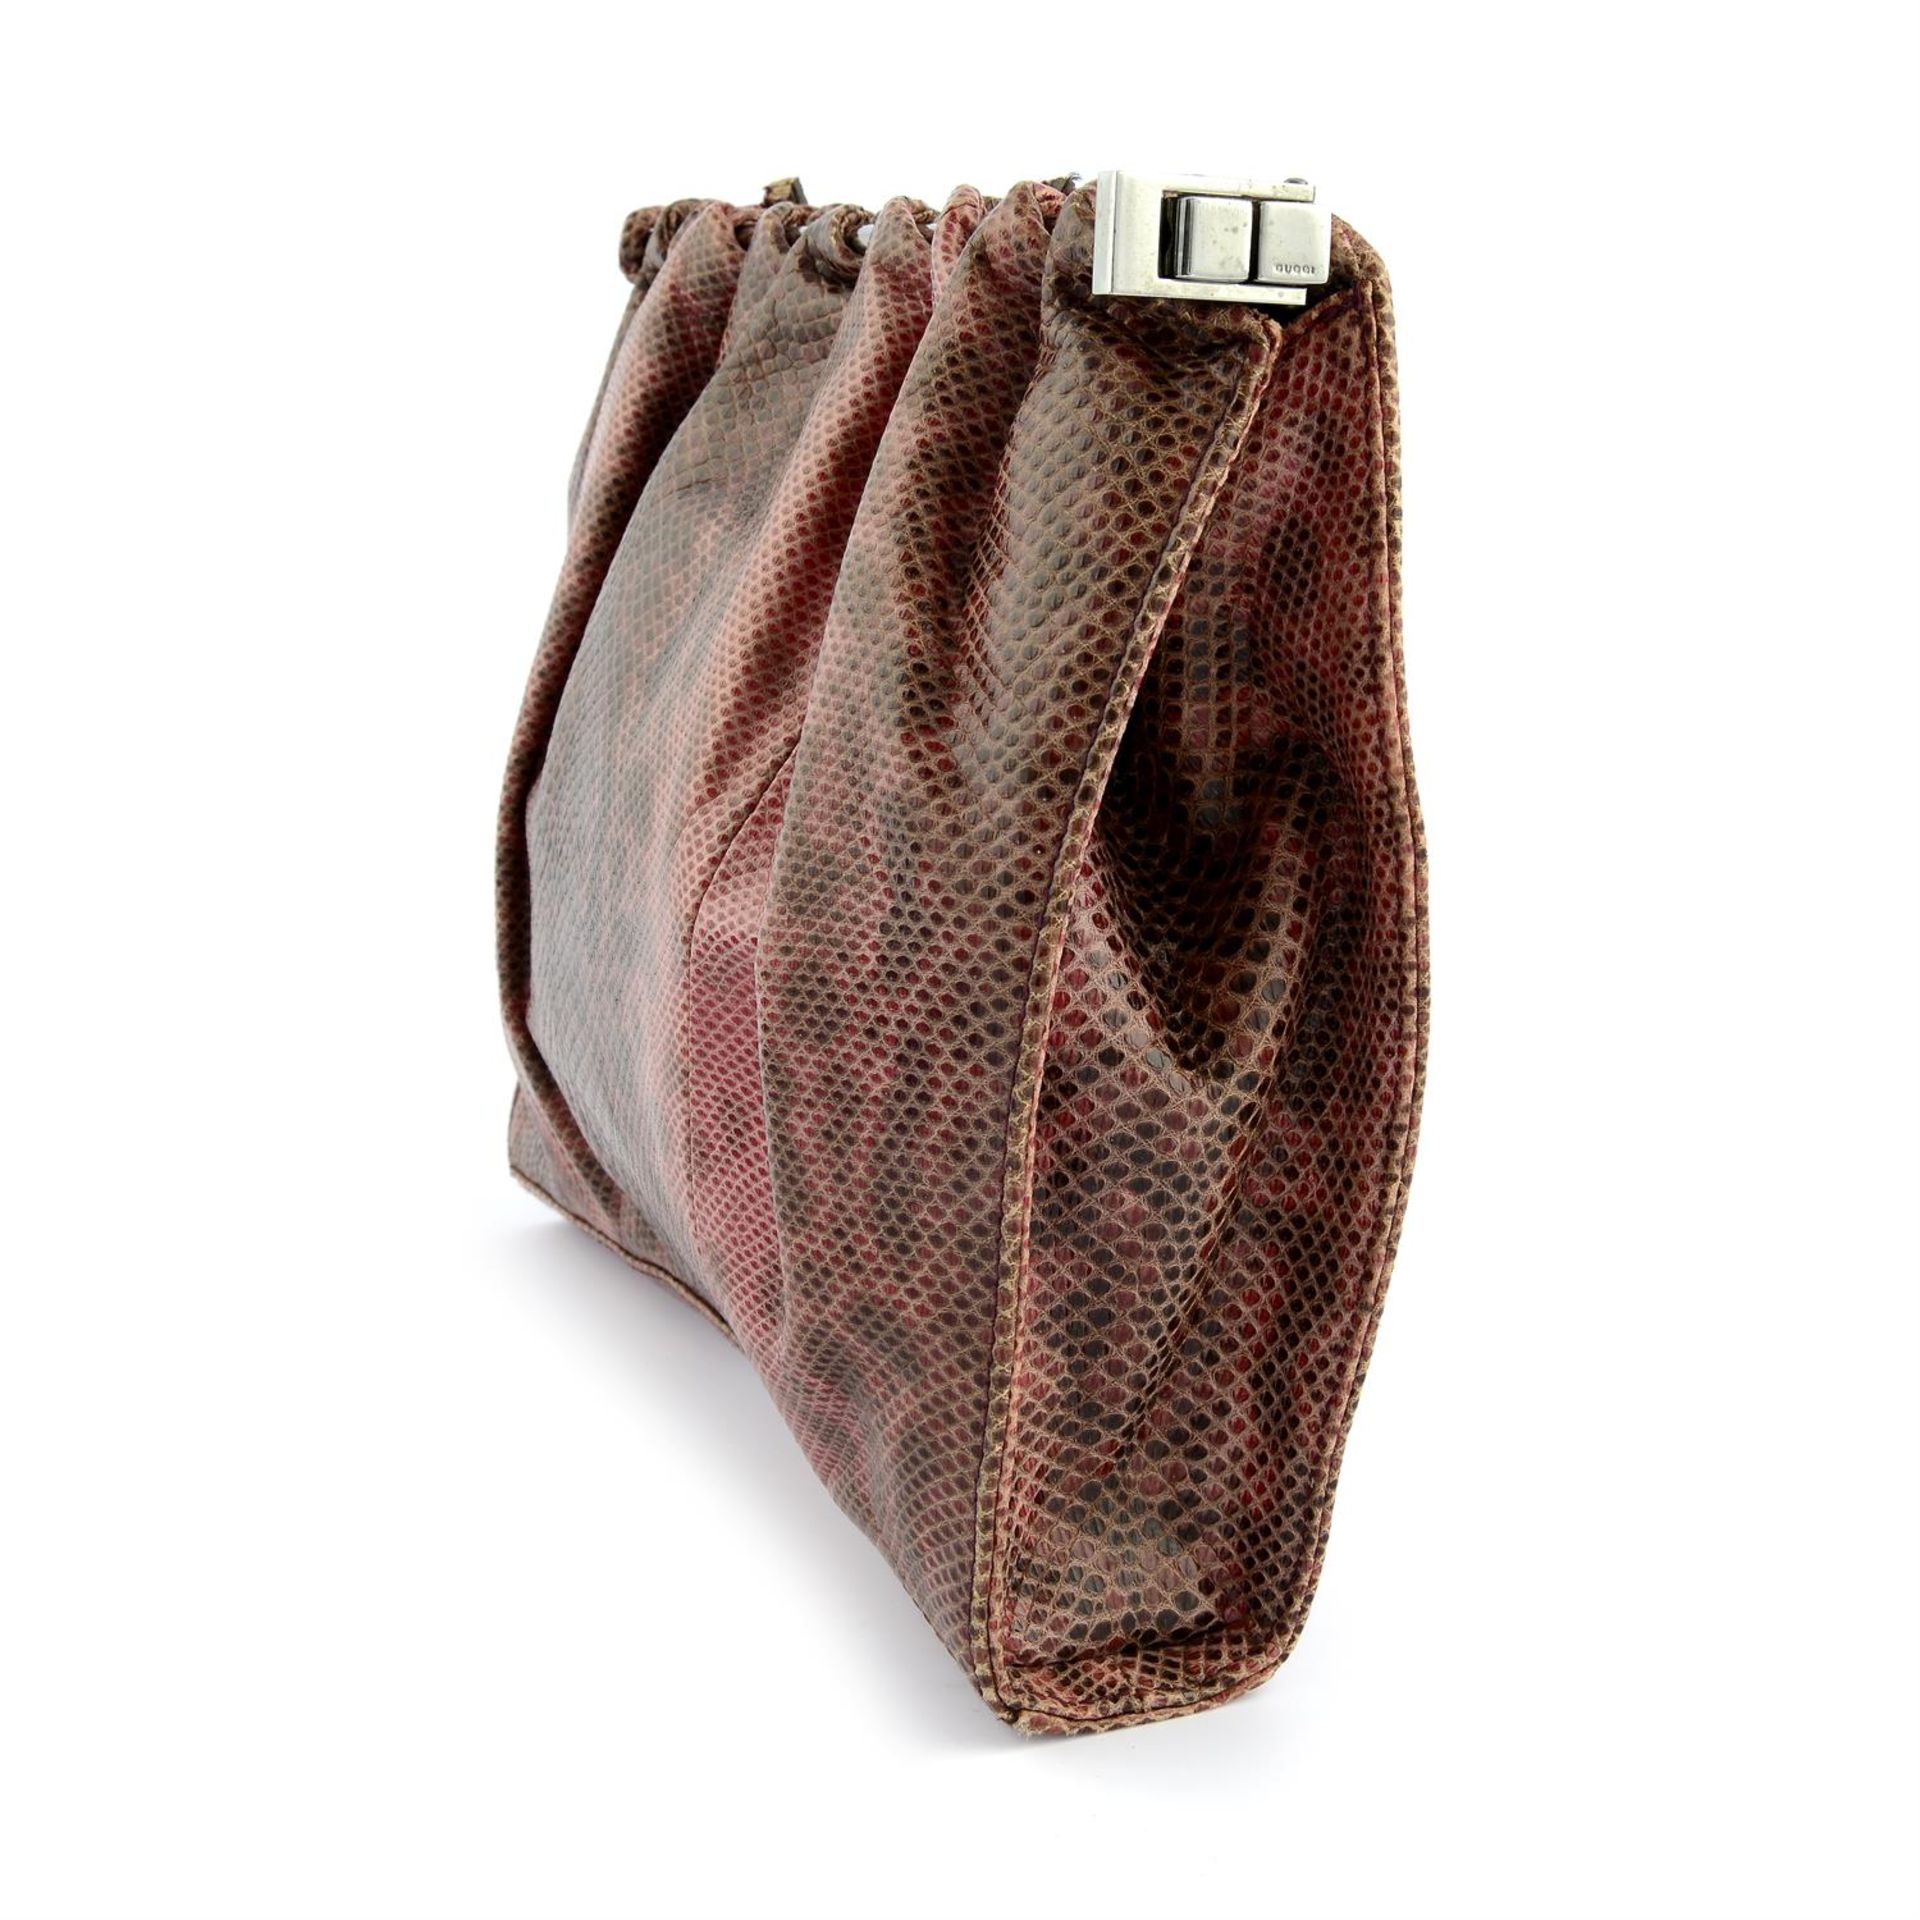 GUCCI - a pink snakeskin bag. - Image 3 of 5